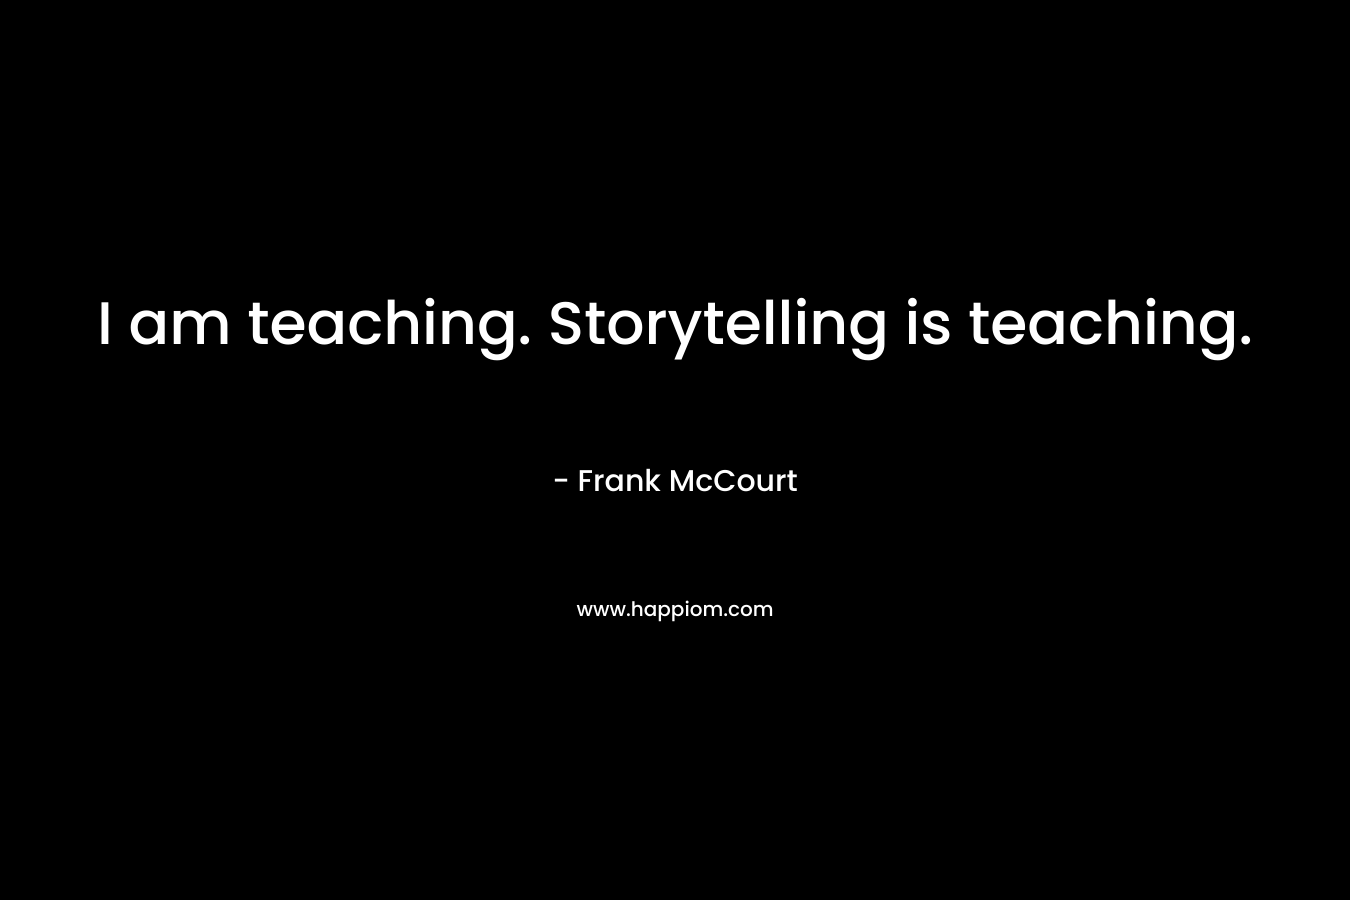 I am teaching. Storytelling is teaching.